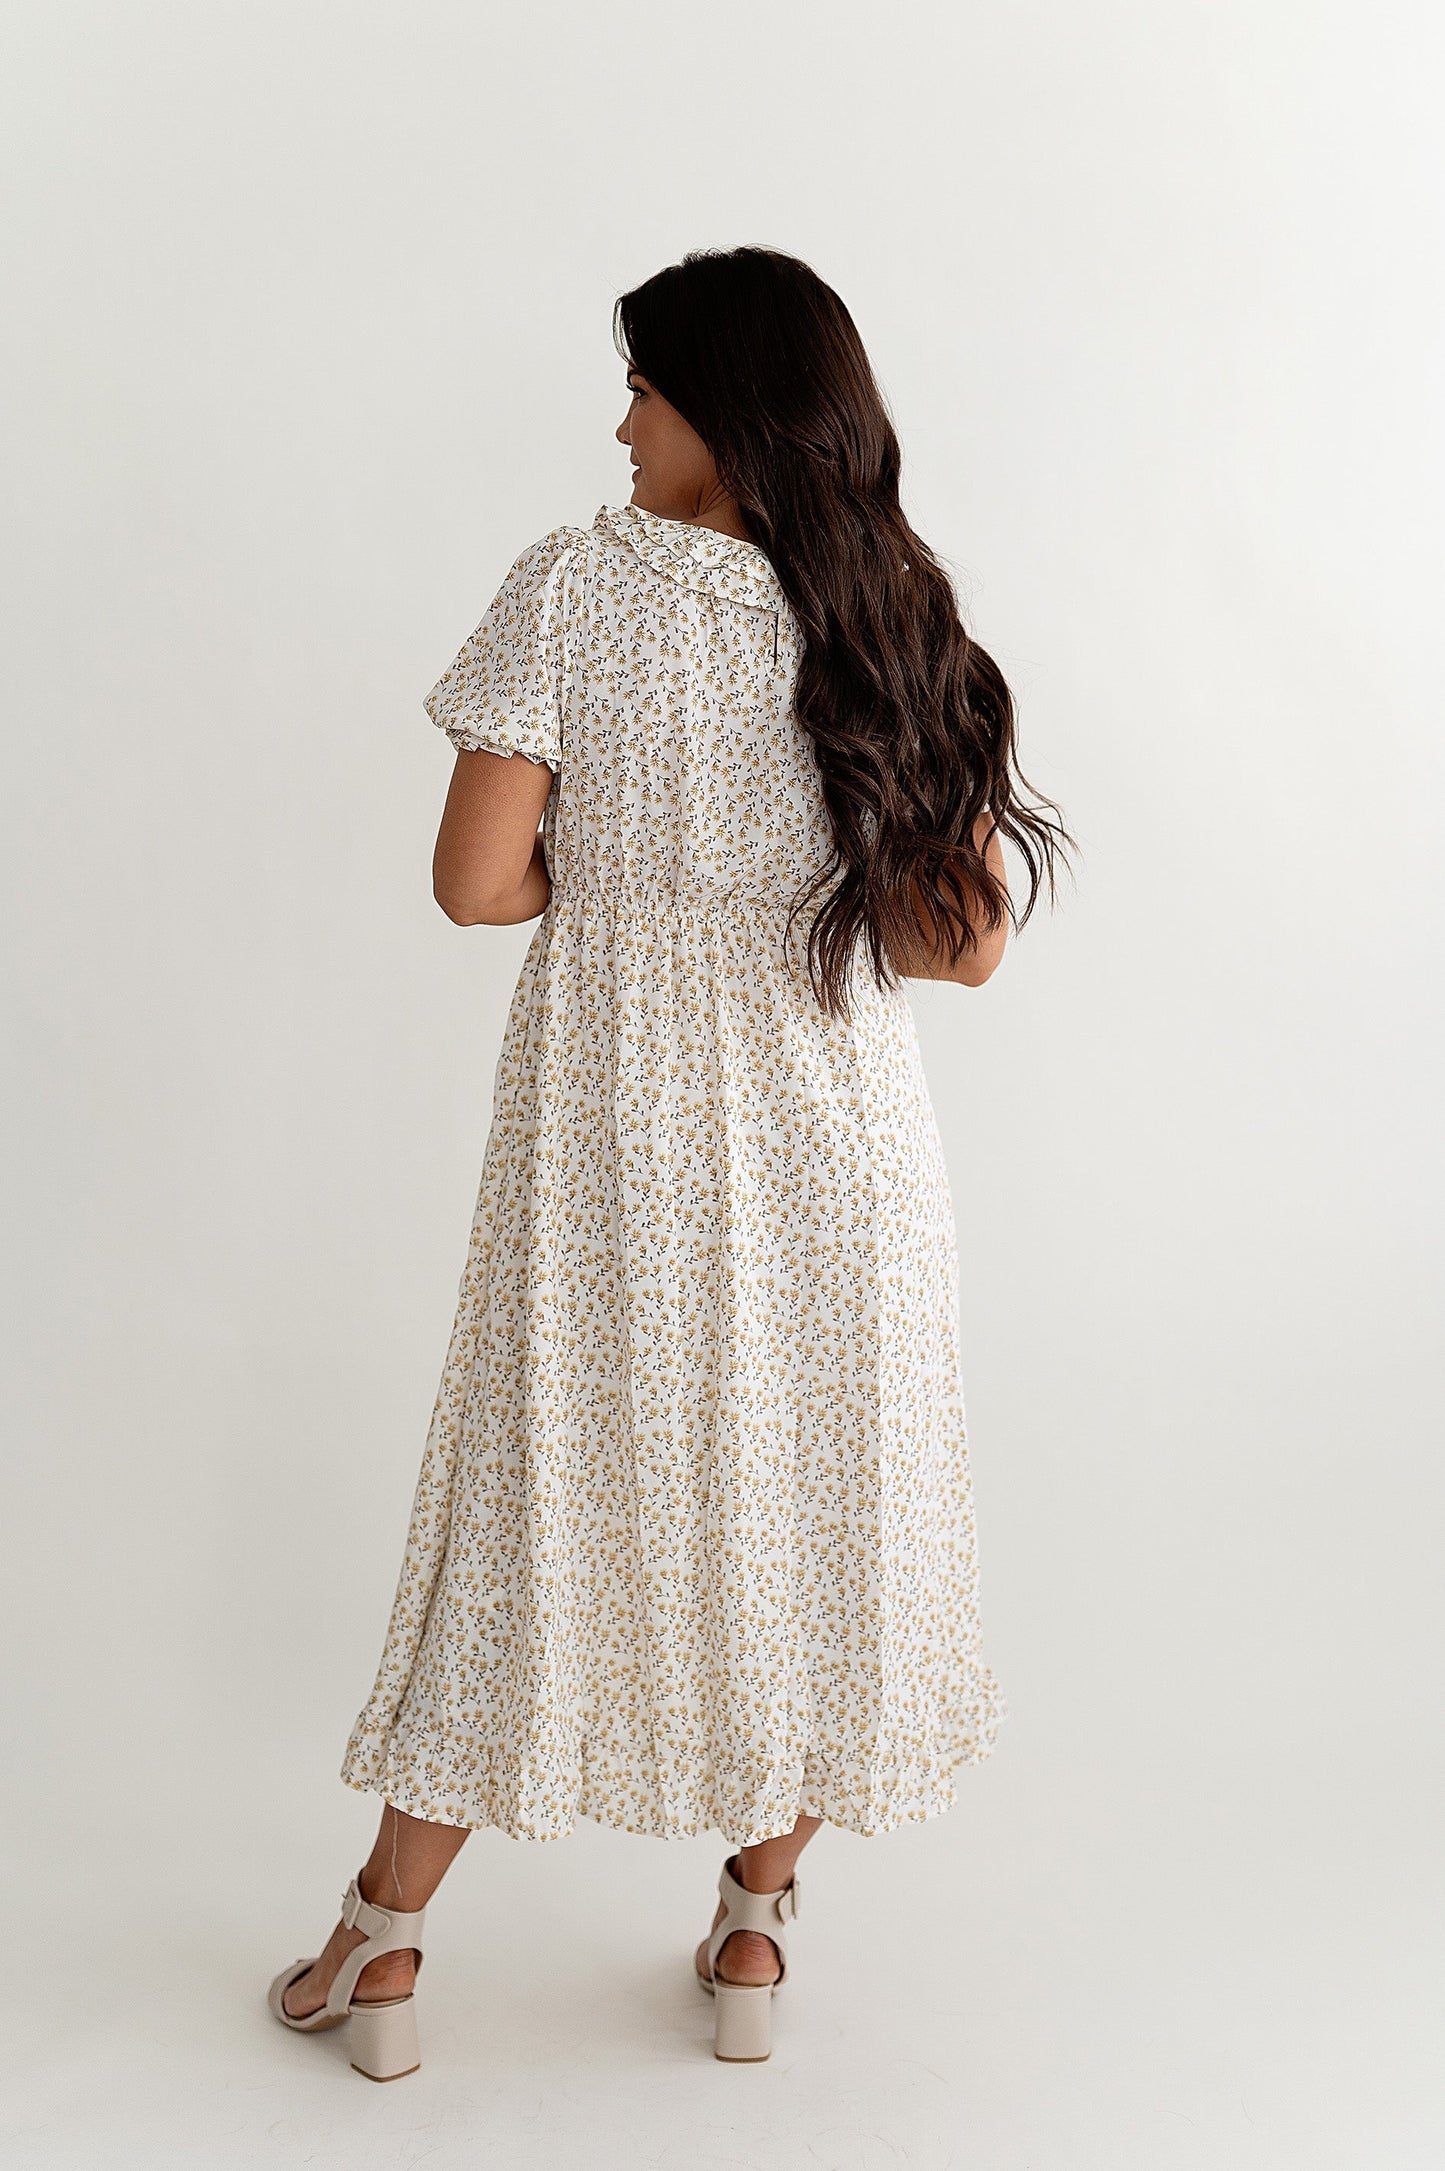 yayaq™-Lexi Dress in Off White